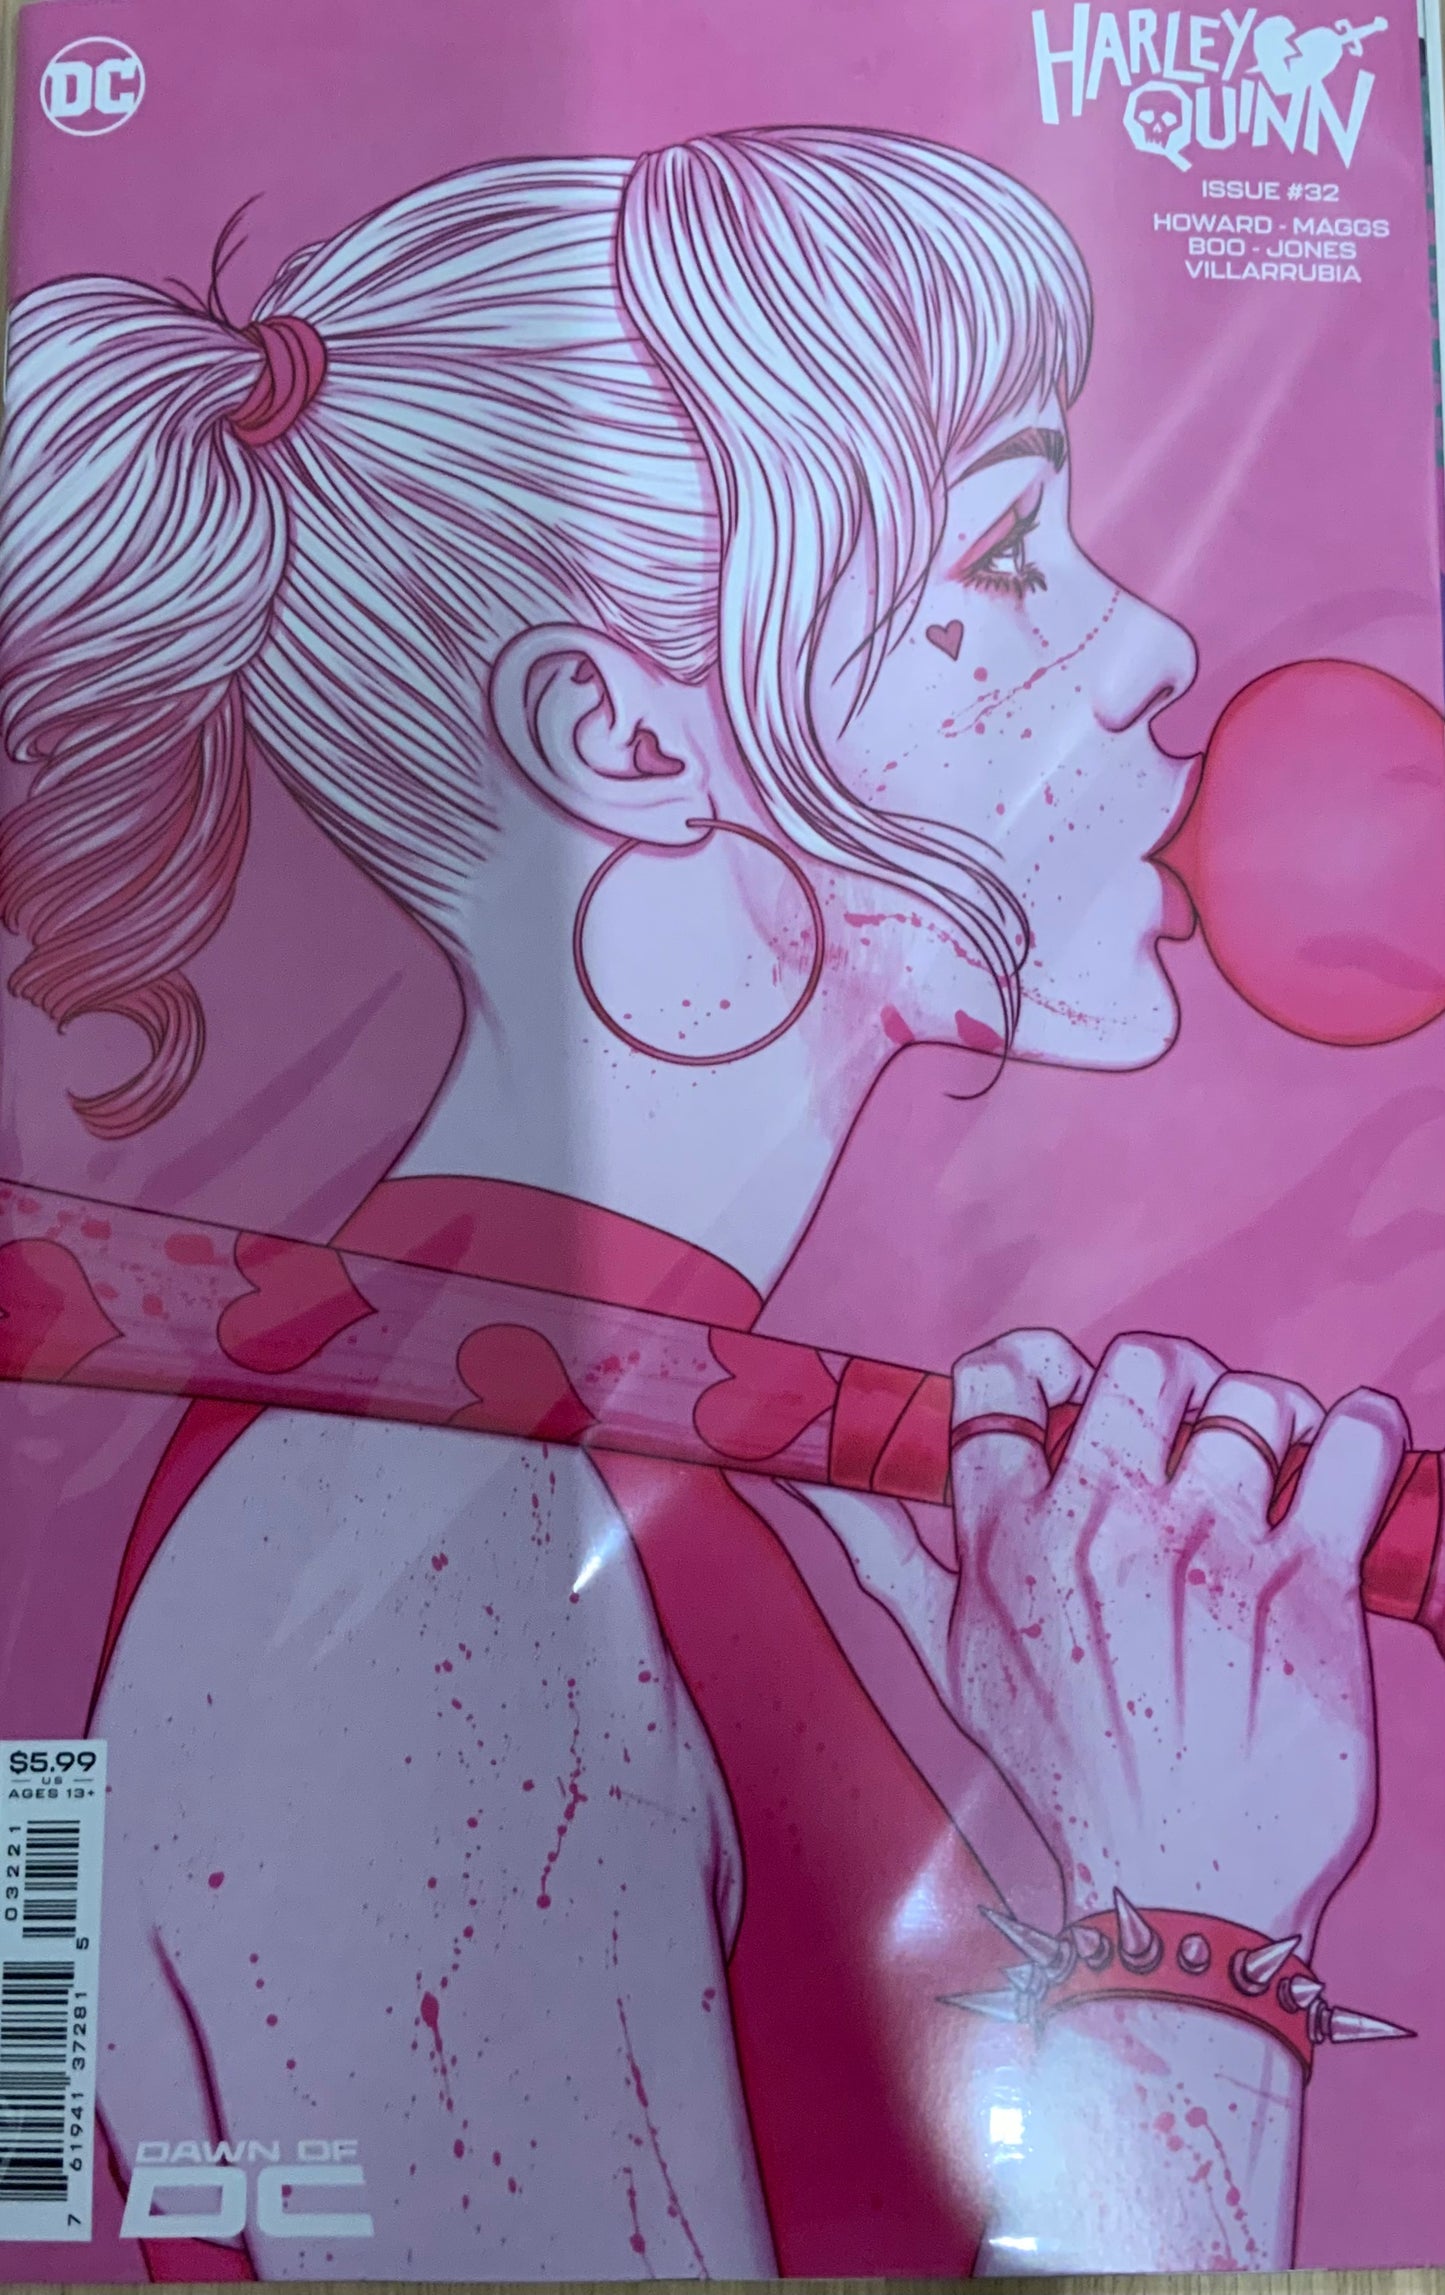 Harley Quinn issue #32